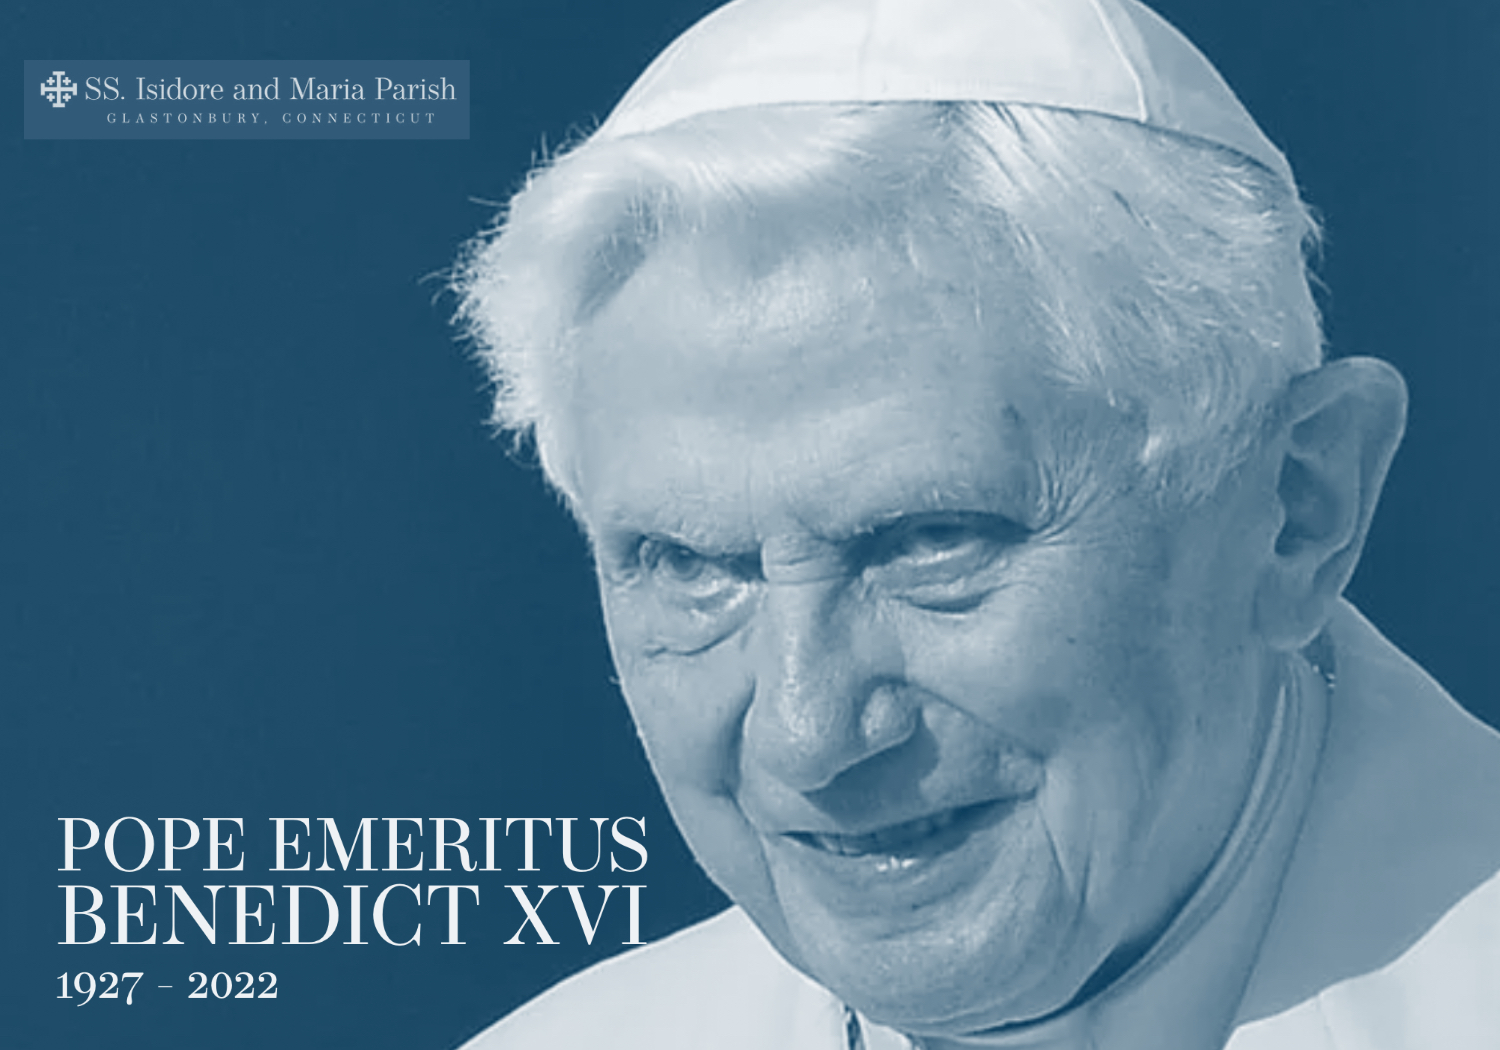 A prayer for the repose of the soul of Pope Emeritus Benedict XVI